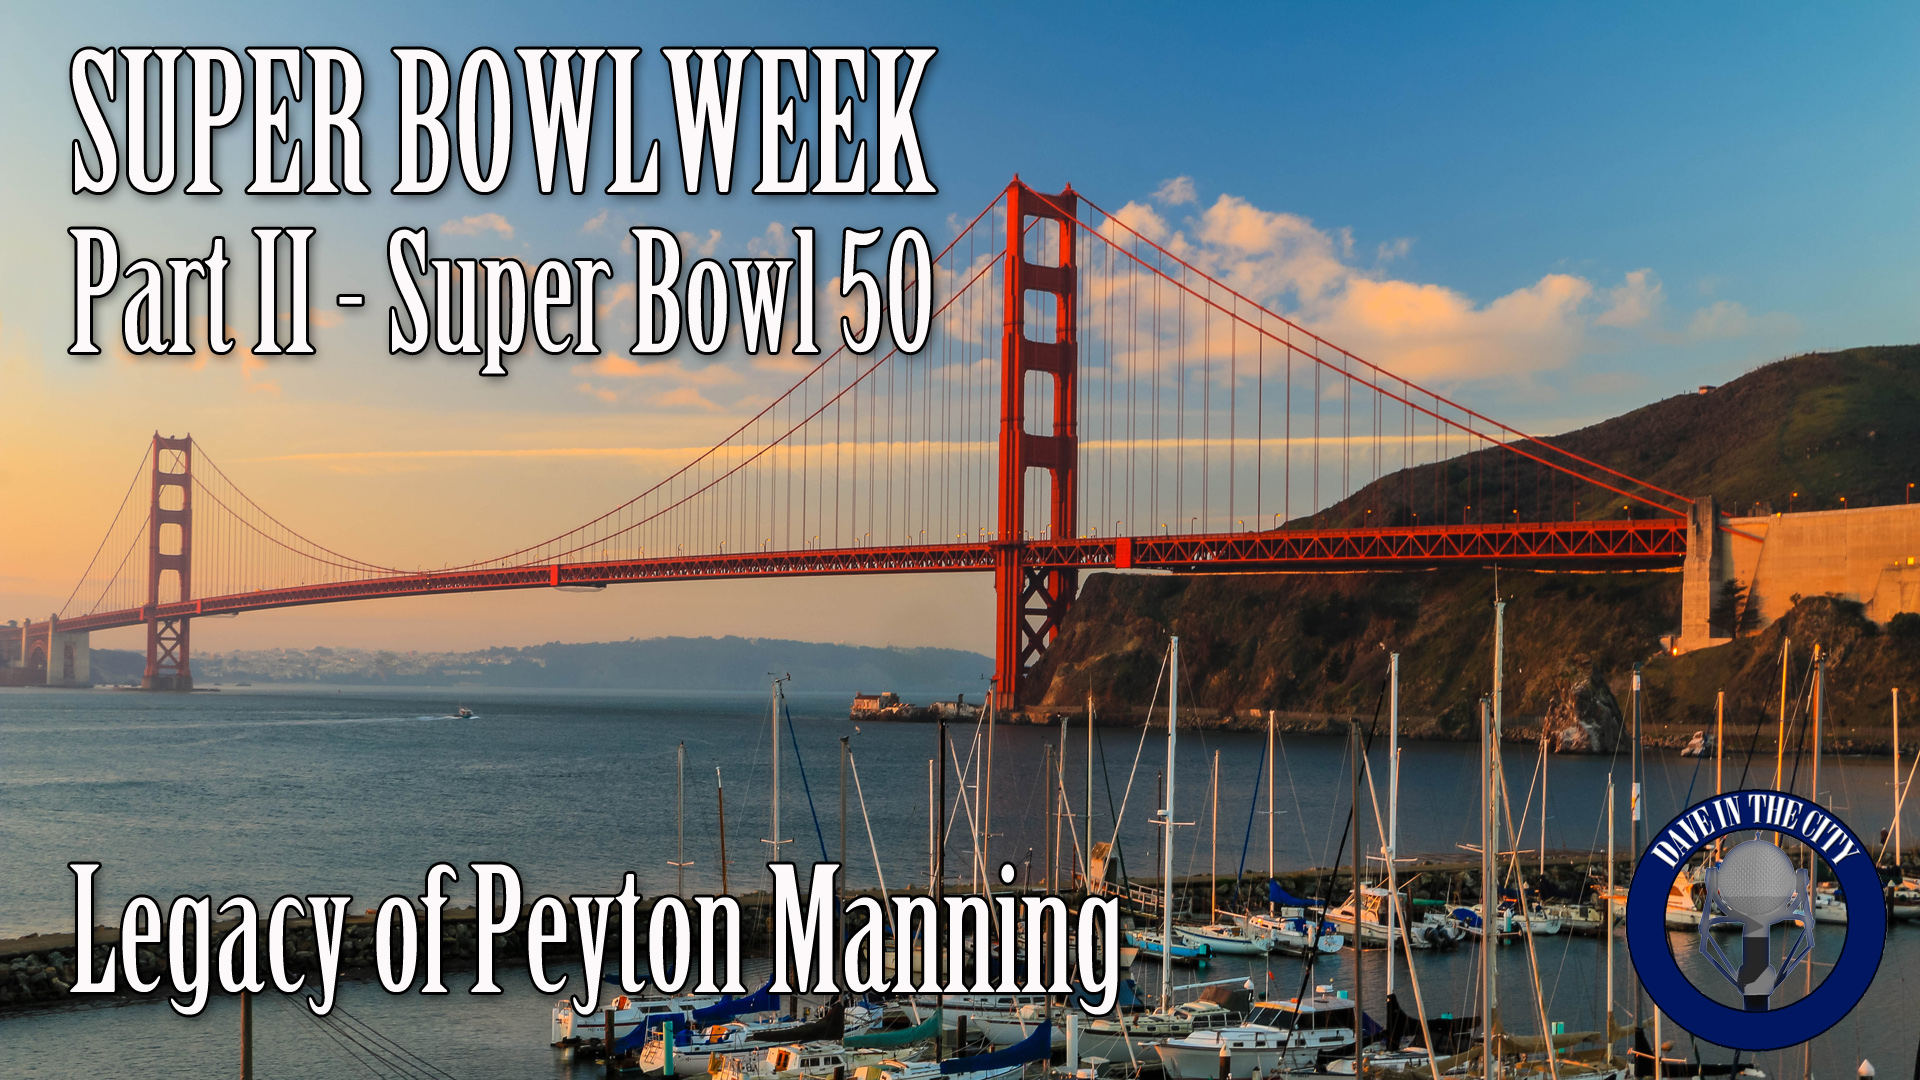 Podcast: Super Bowl Week pt II: Panthers vs Broncos - Legacy of Manning (02-02-16)